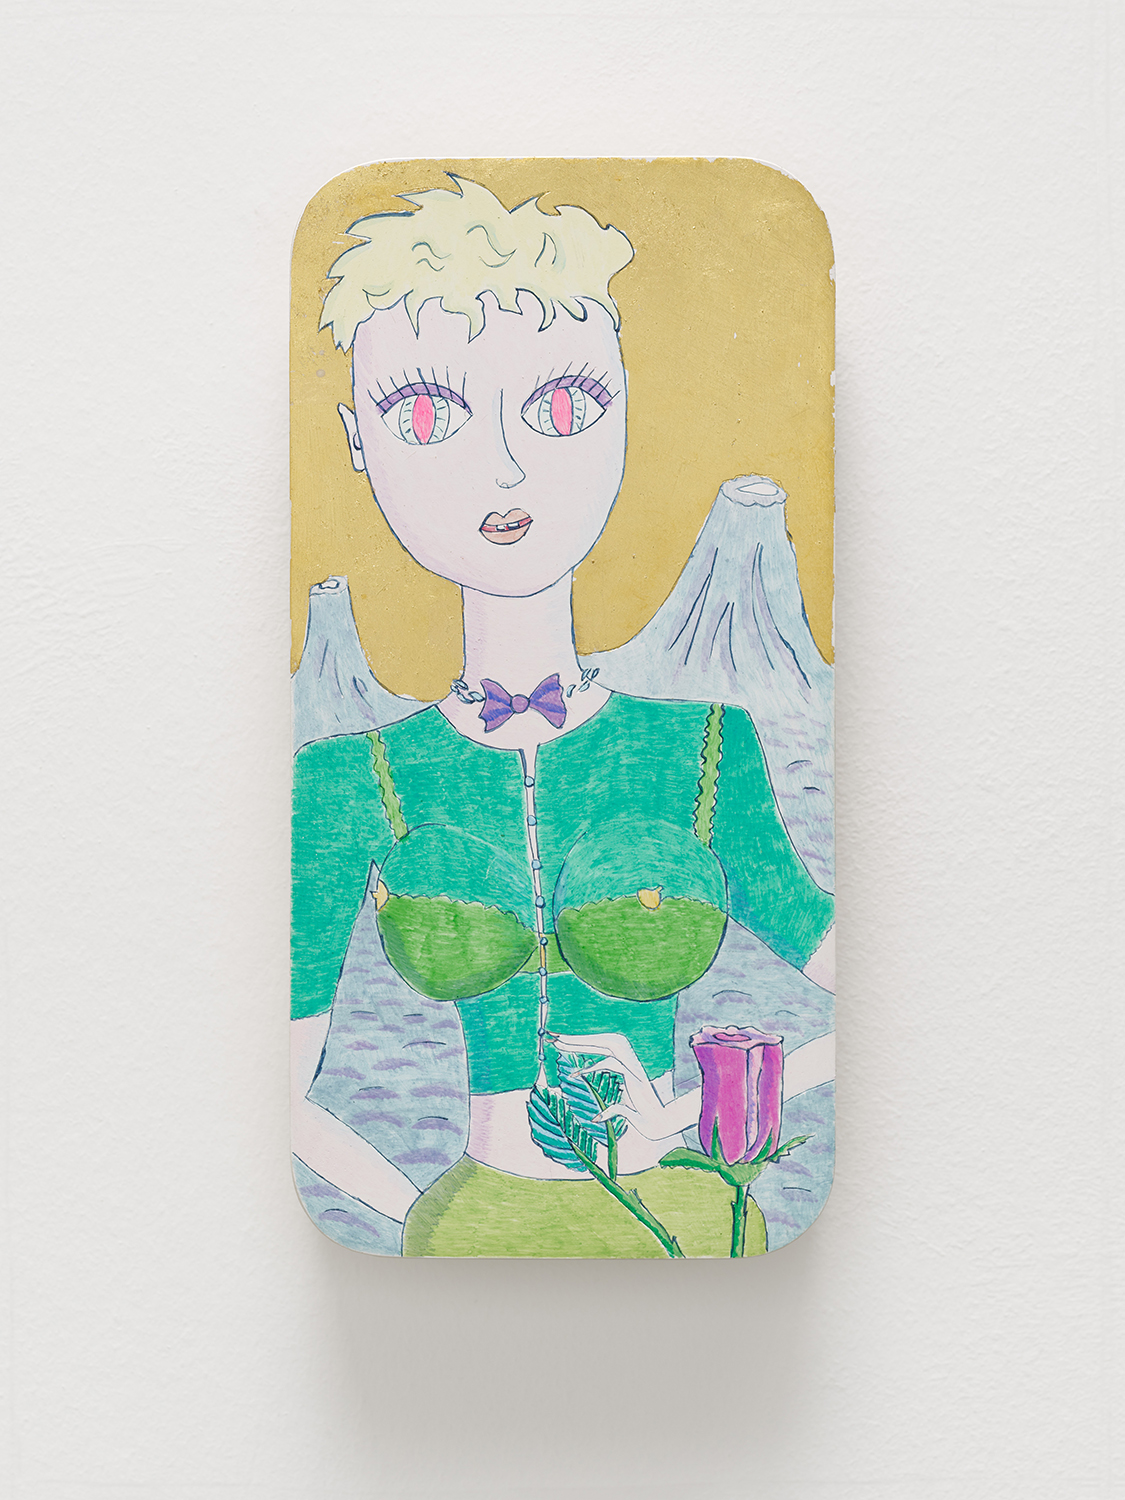  Magdalena Kita,  Little Princess,  2018, Egg tempera and gold leaf on wood, 23 x 11,5 cm 